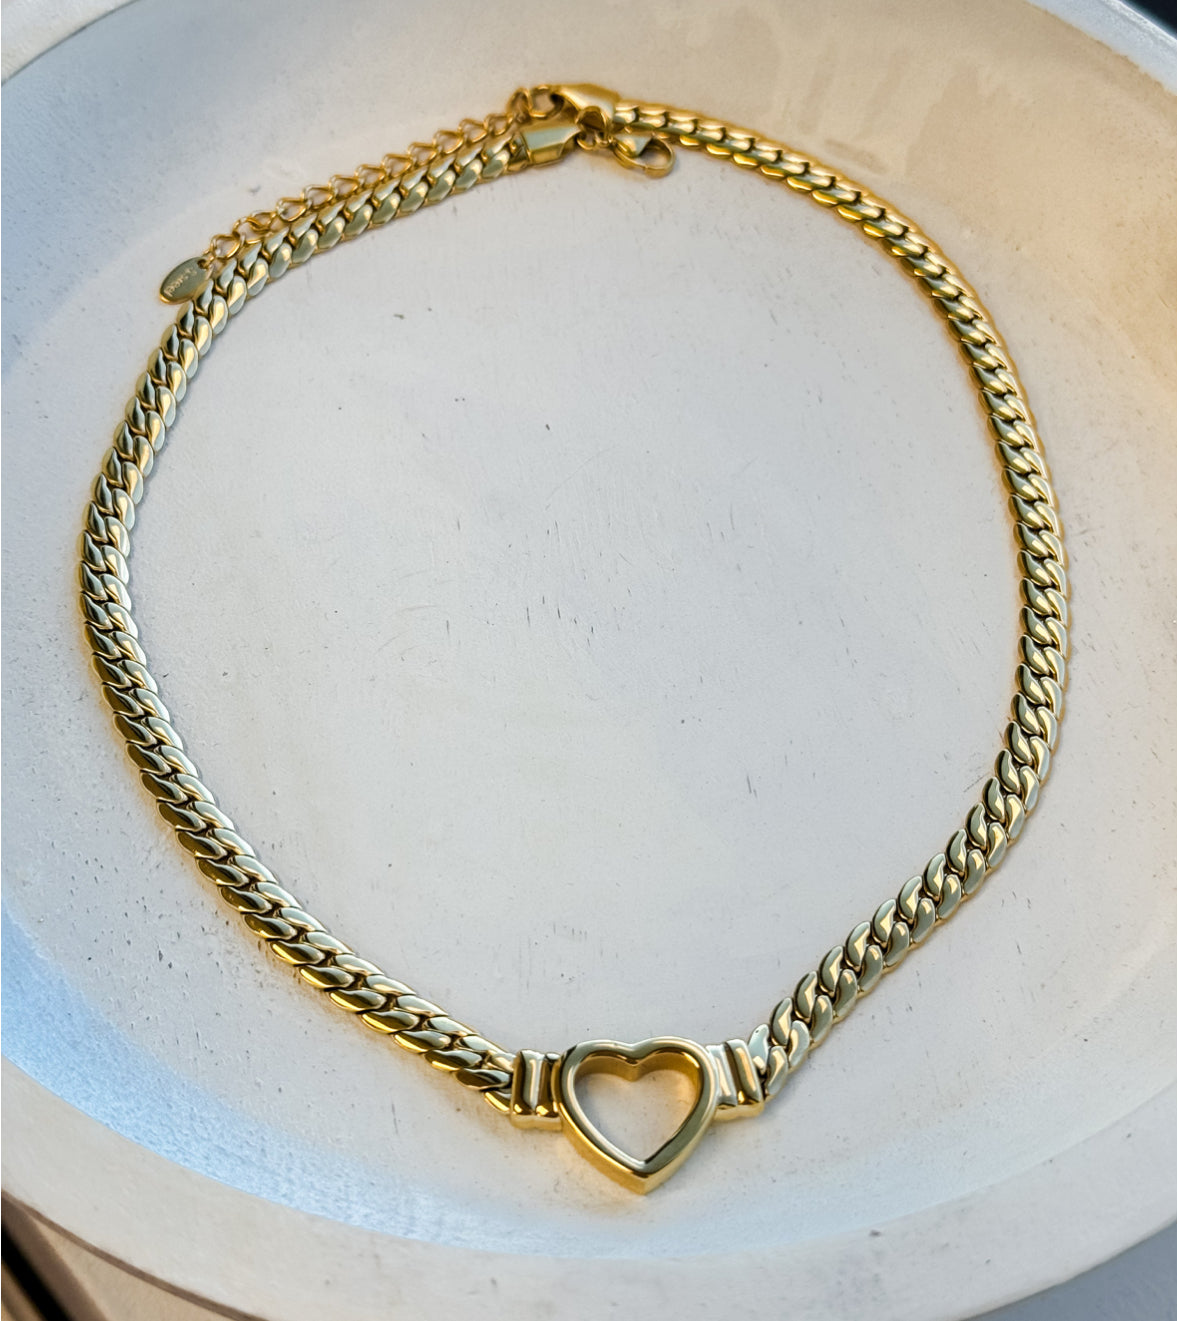 It’s Love Heart Necklace